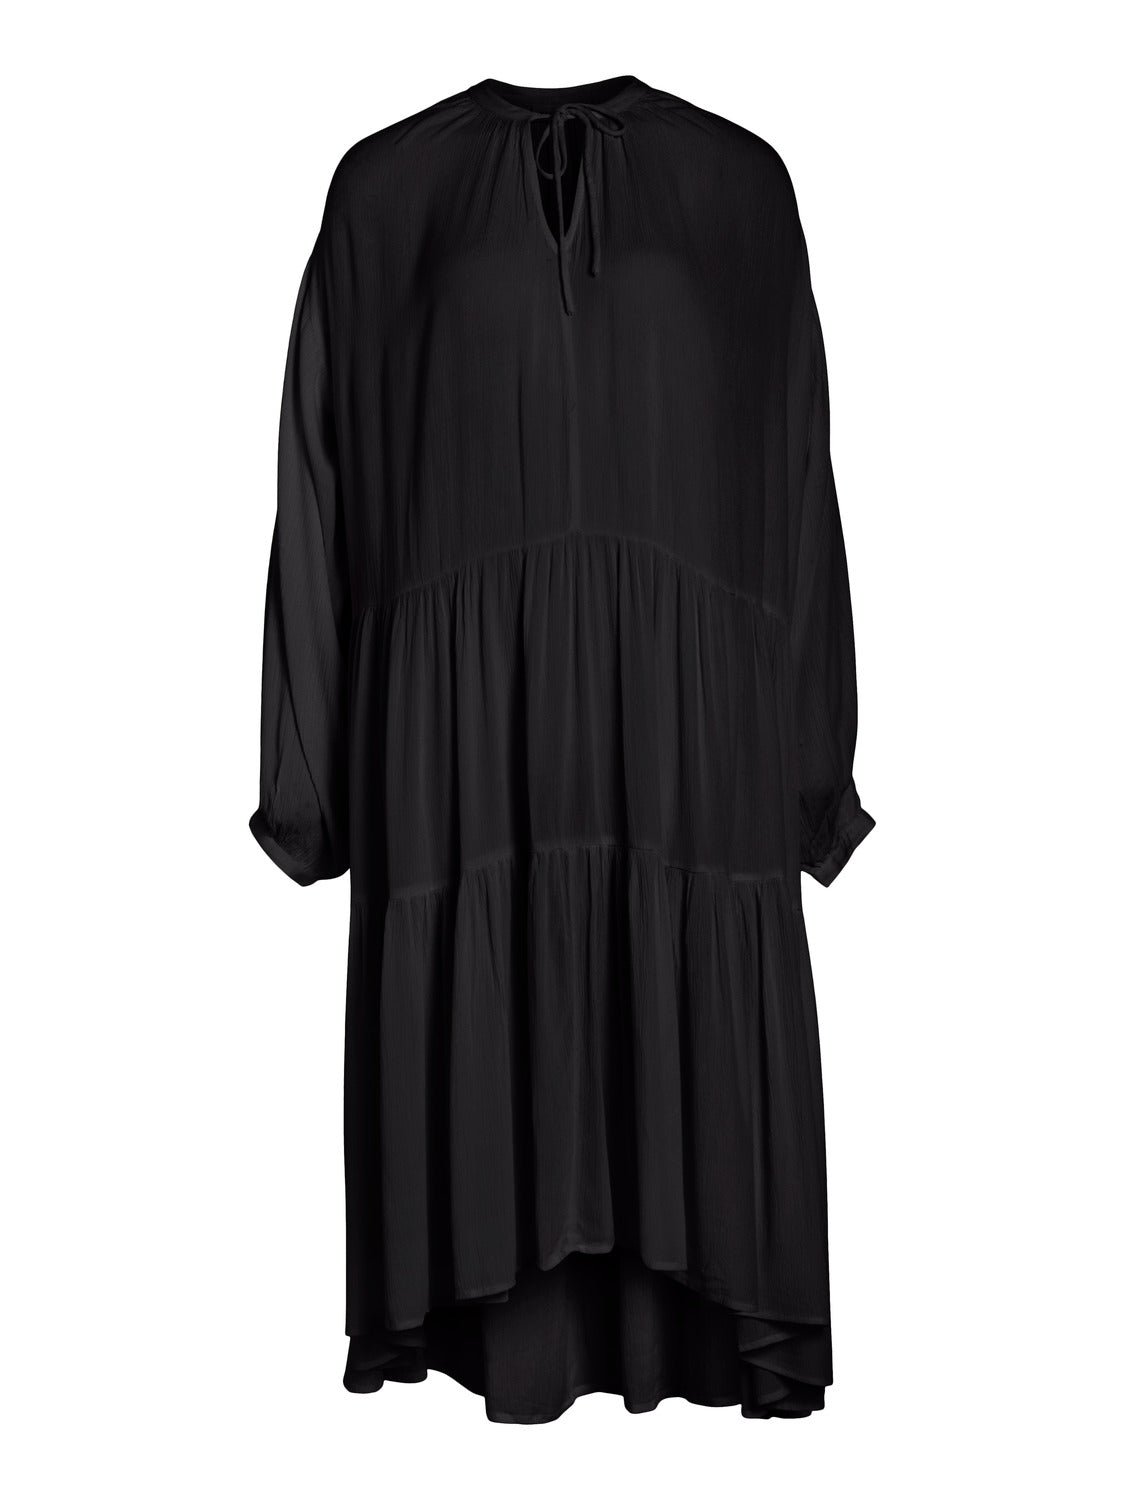 VITINIA Dress - Black